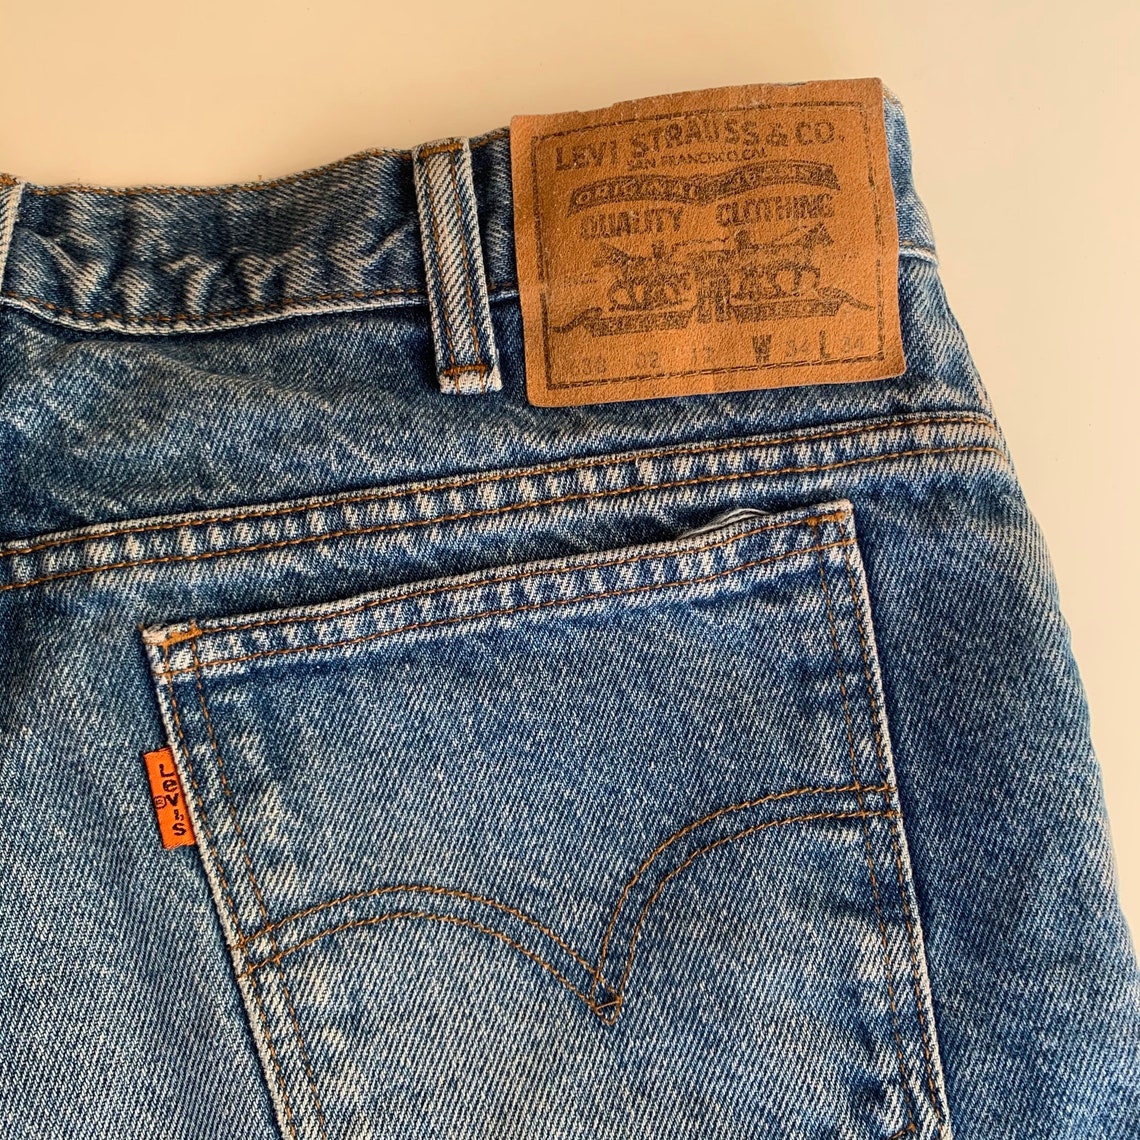 Levis 630 Jeans Original Levis Straus Denim Vintage orange | Etsy